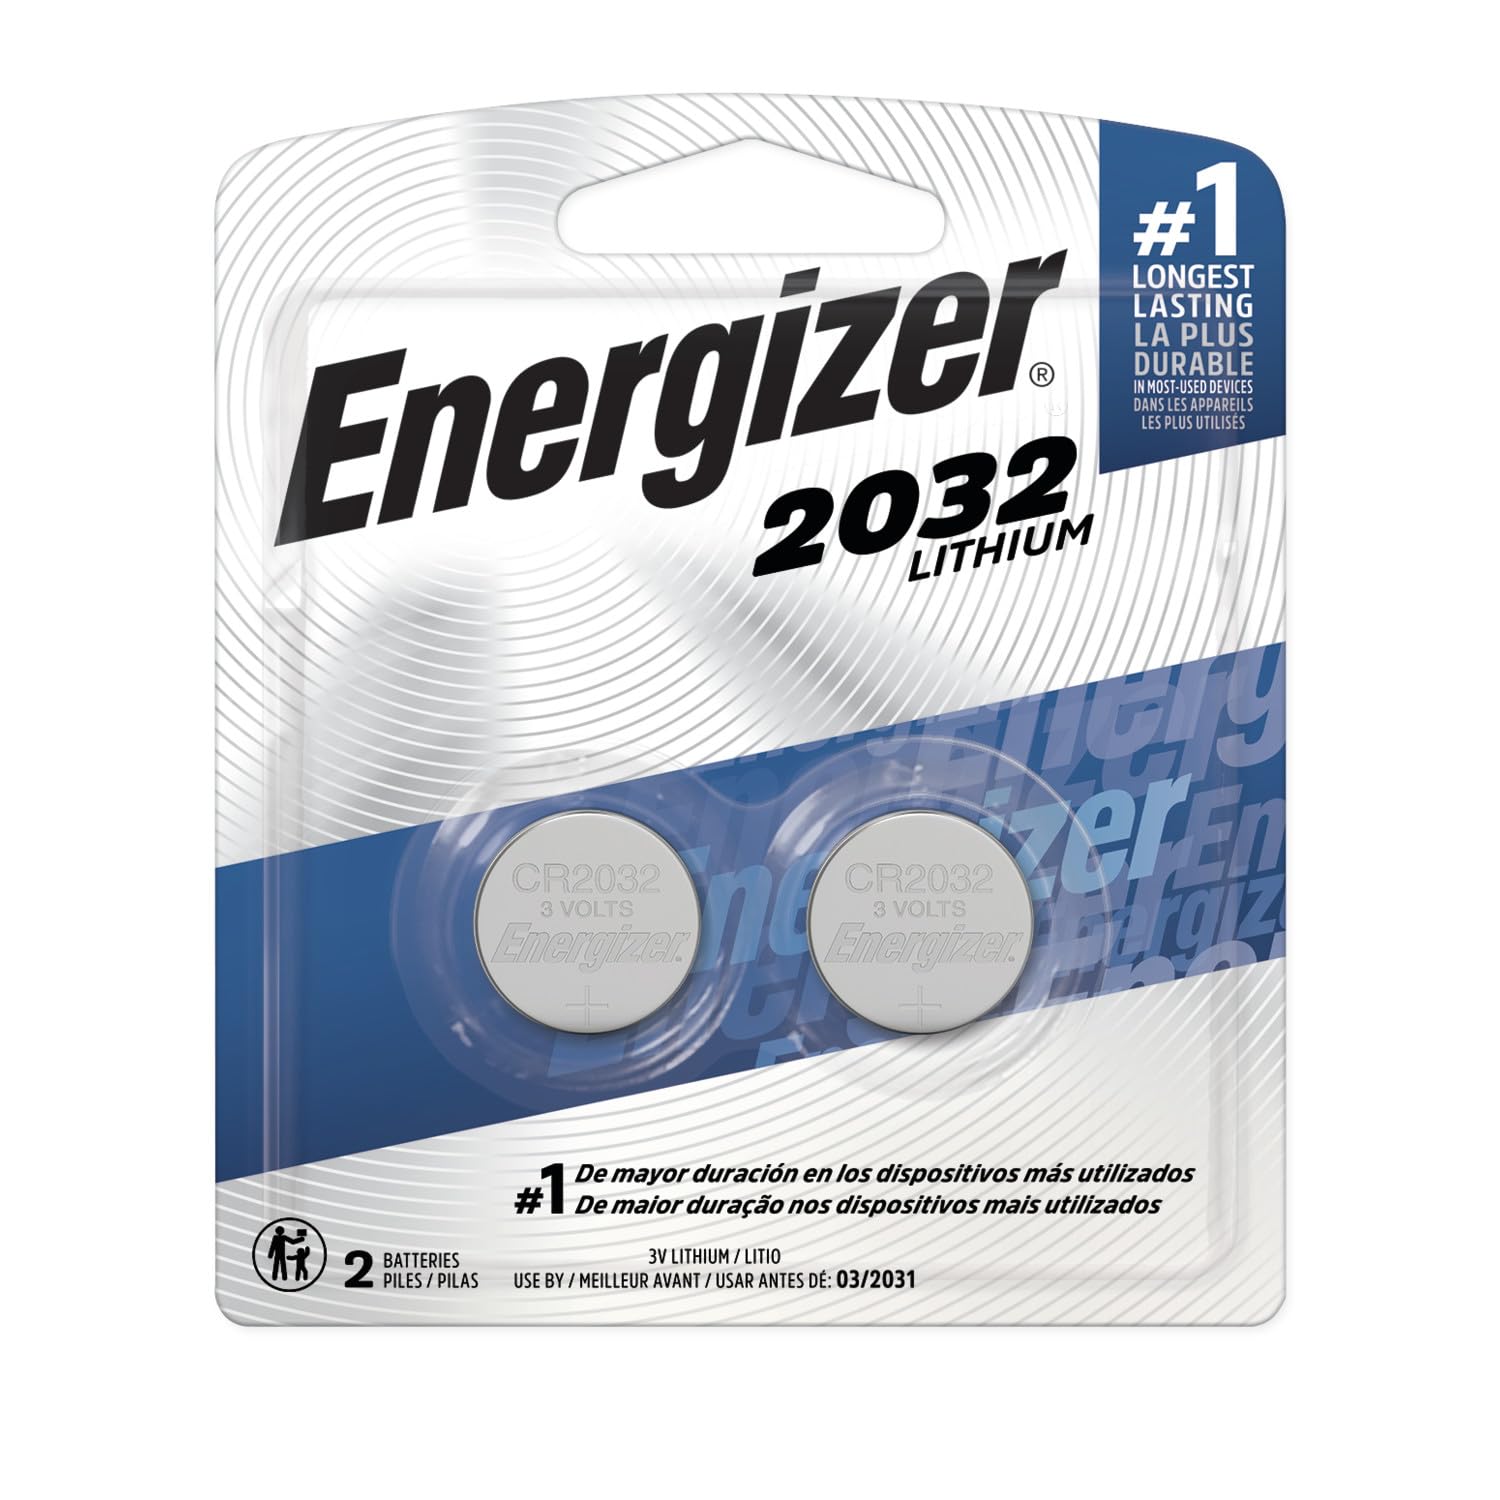 Energizer 2032 Batteries, Lithium CR2032 Battery, 2 Count